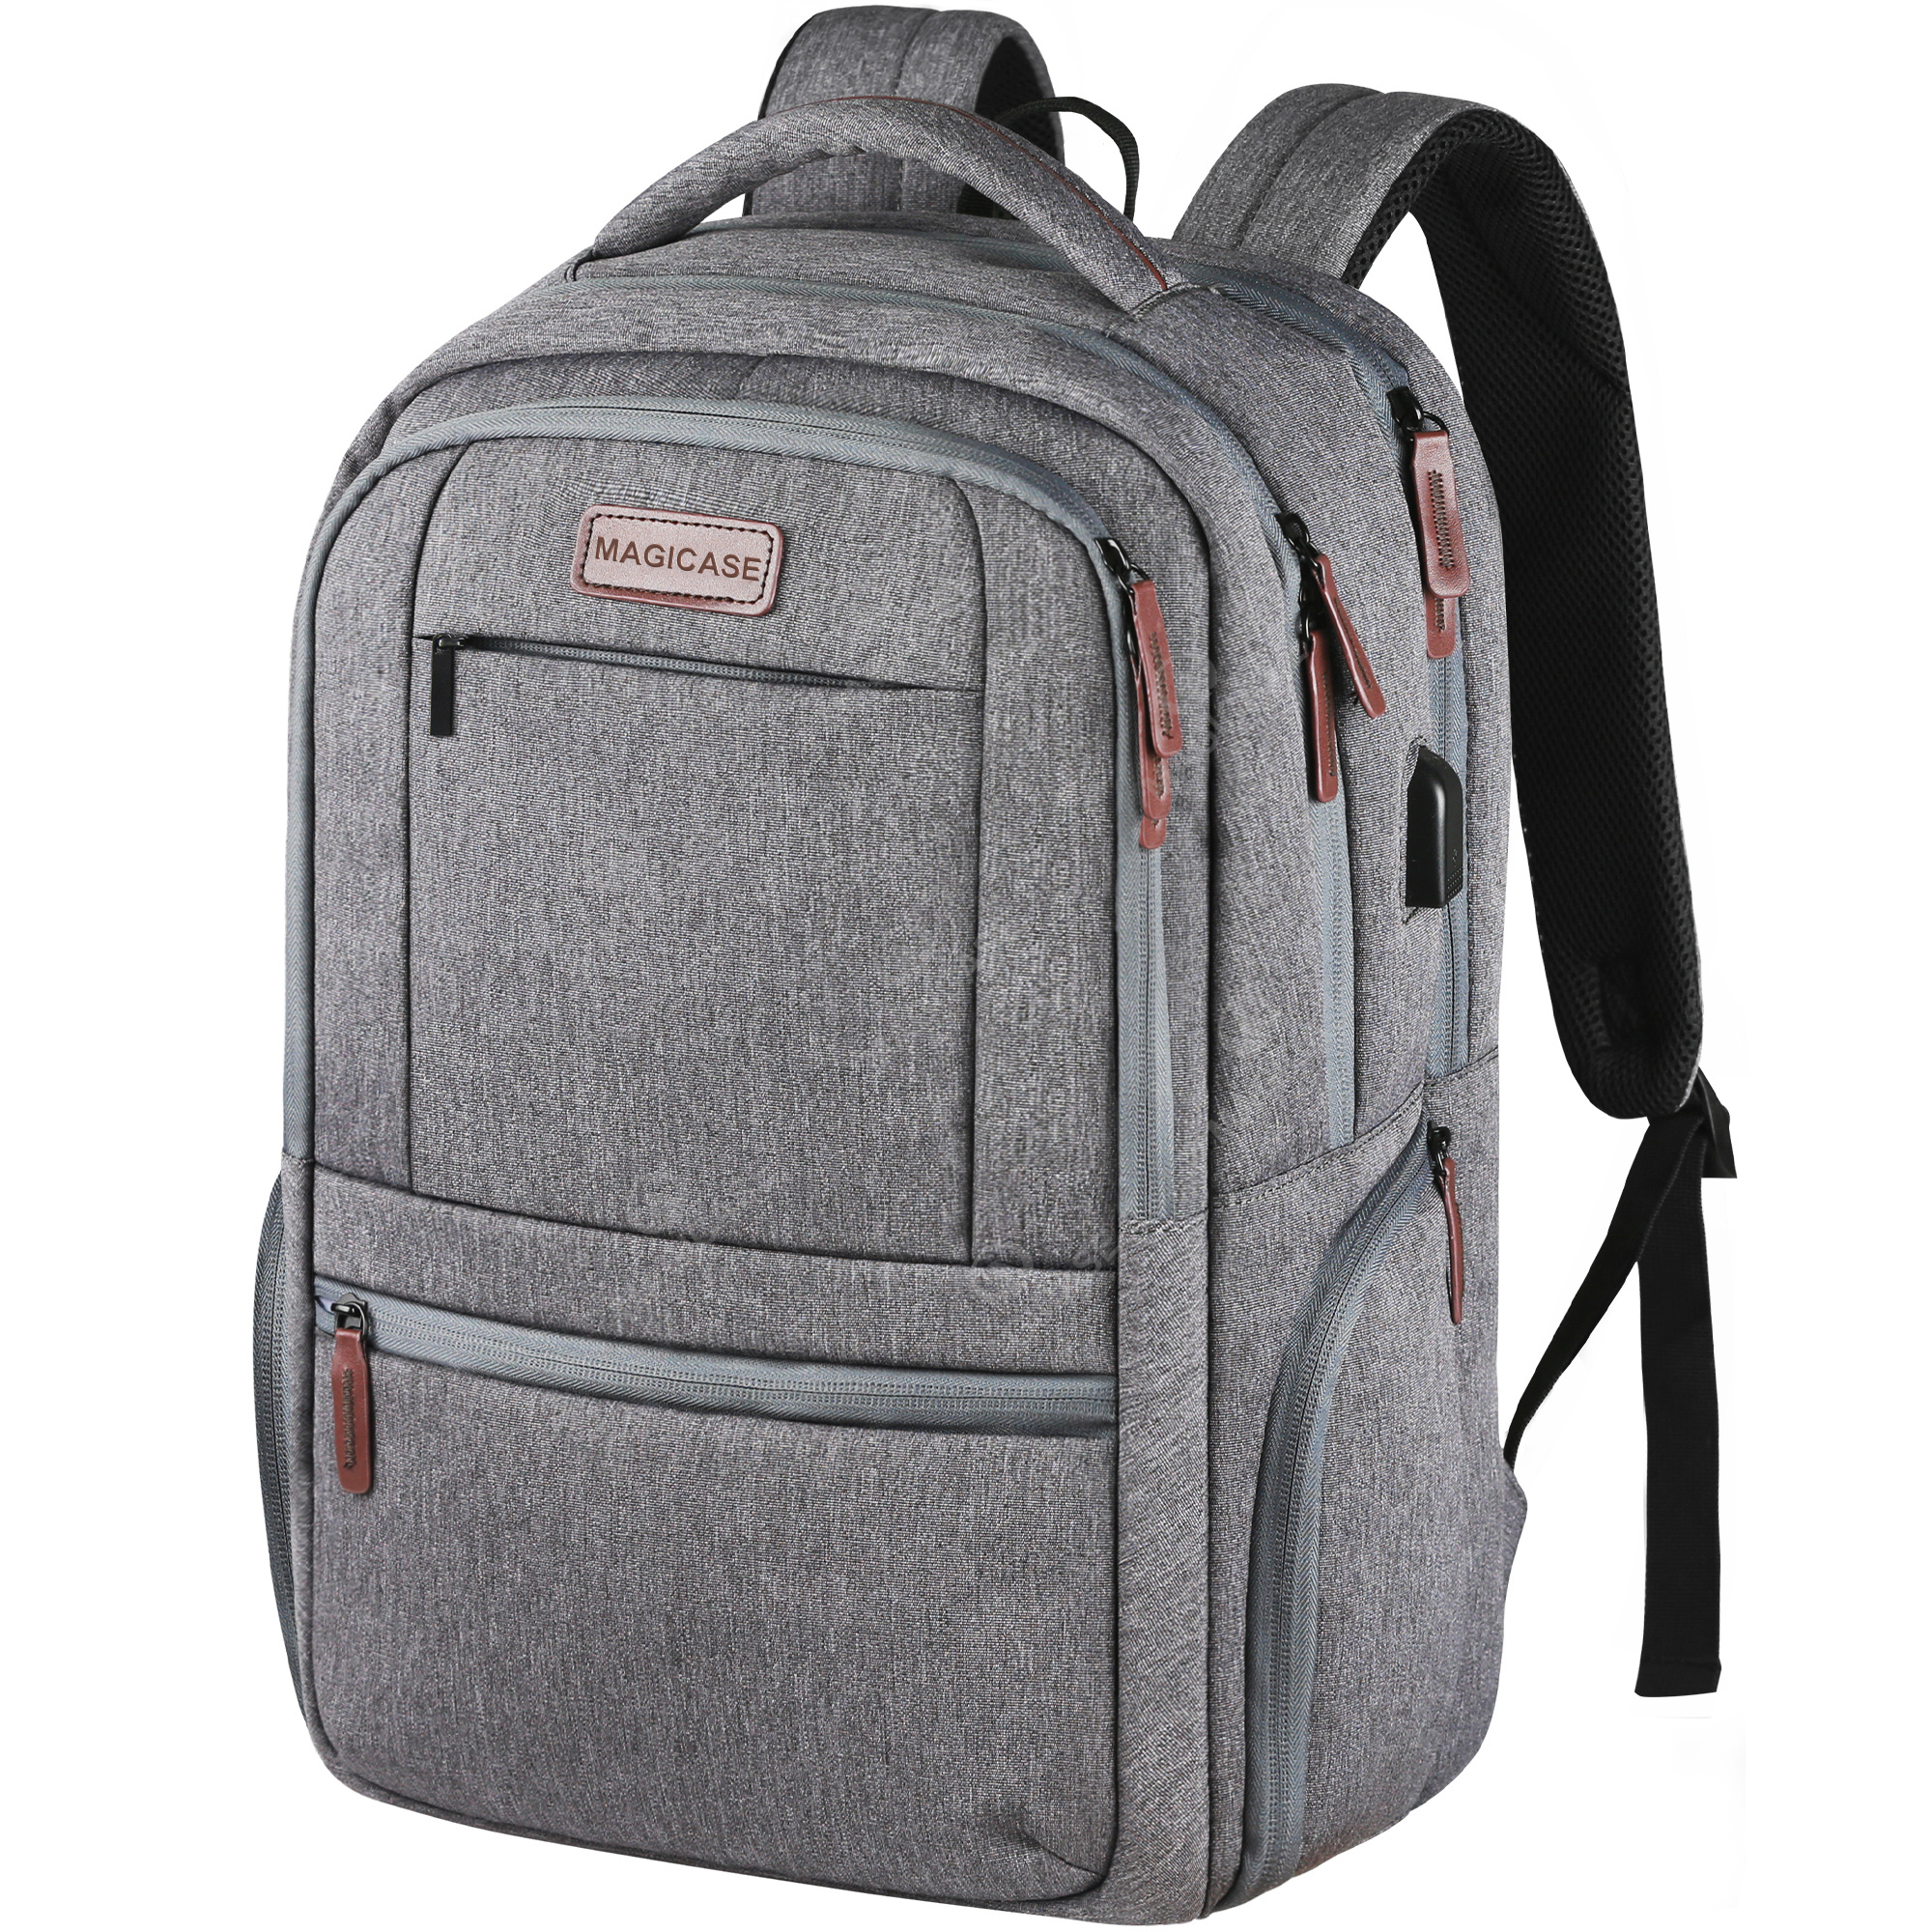 MGE-343 Laptop Backpack